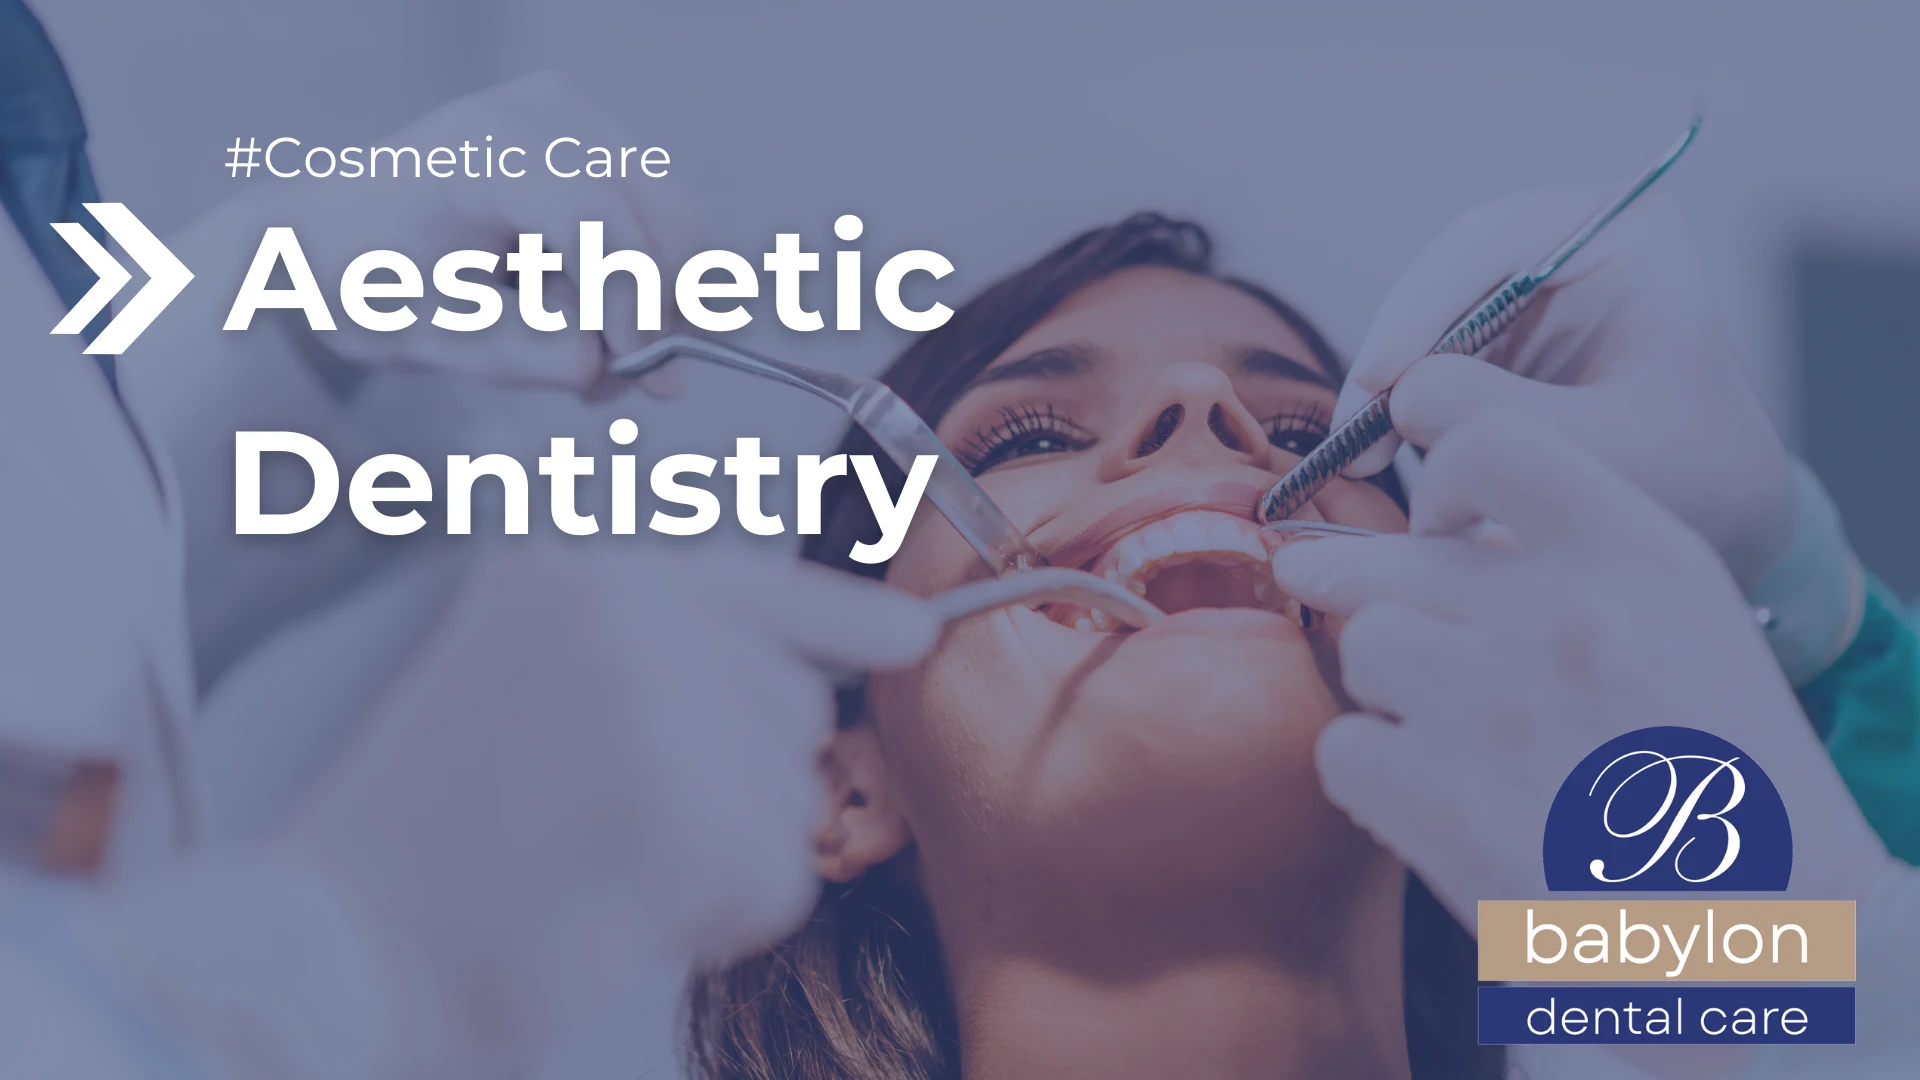 Aesthetic Dentistry Image - new logo